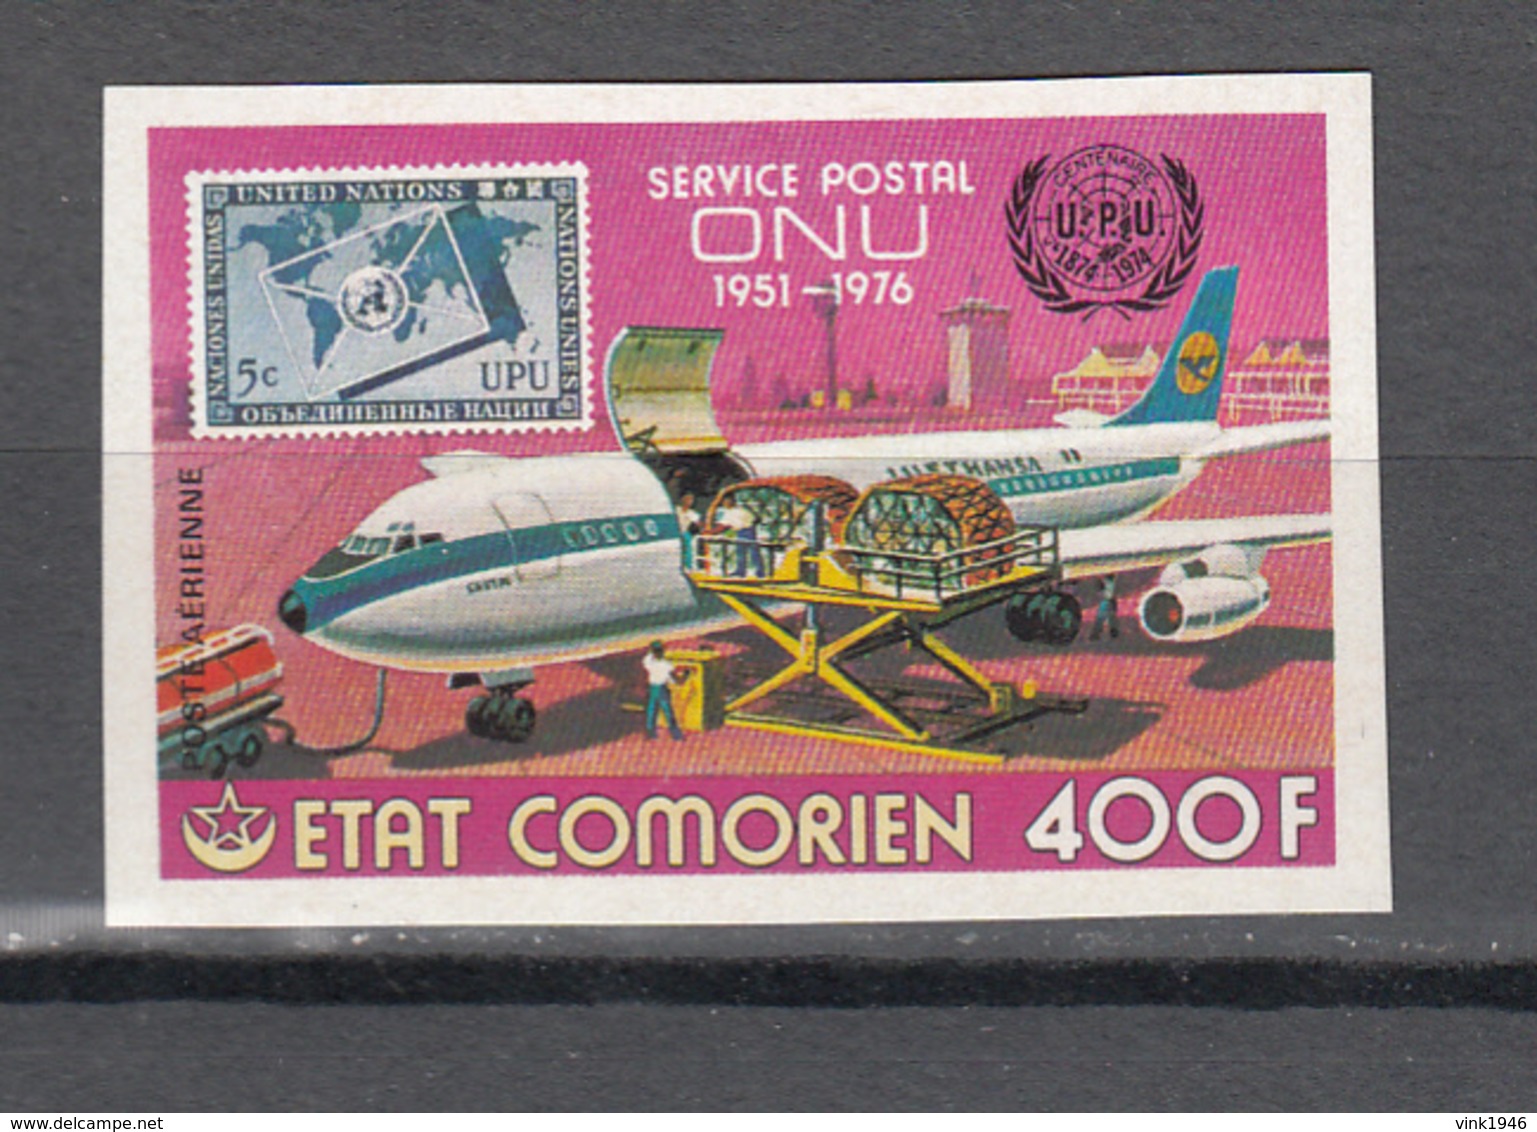 Comores 1974,1V.IMP,centenario De La UPU 1874-1974,Union Postale Universelle,MNH/Postfris(A3570) - UPU (Universal Postal Union)